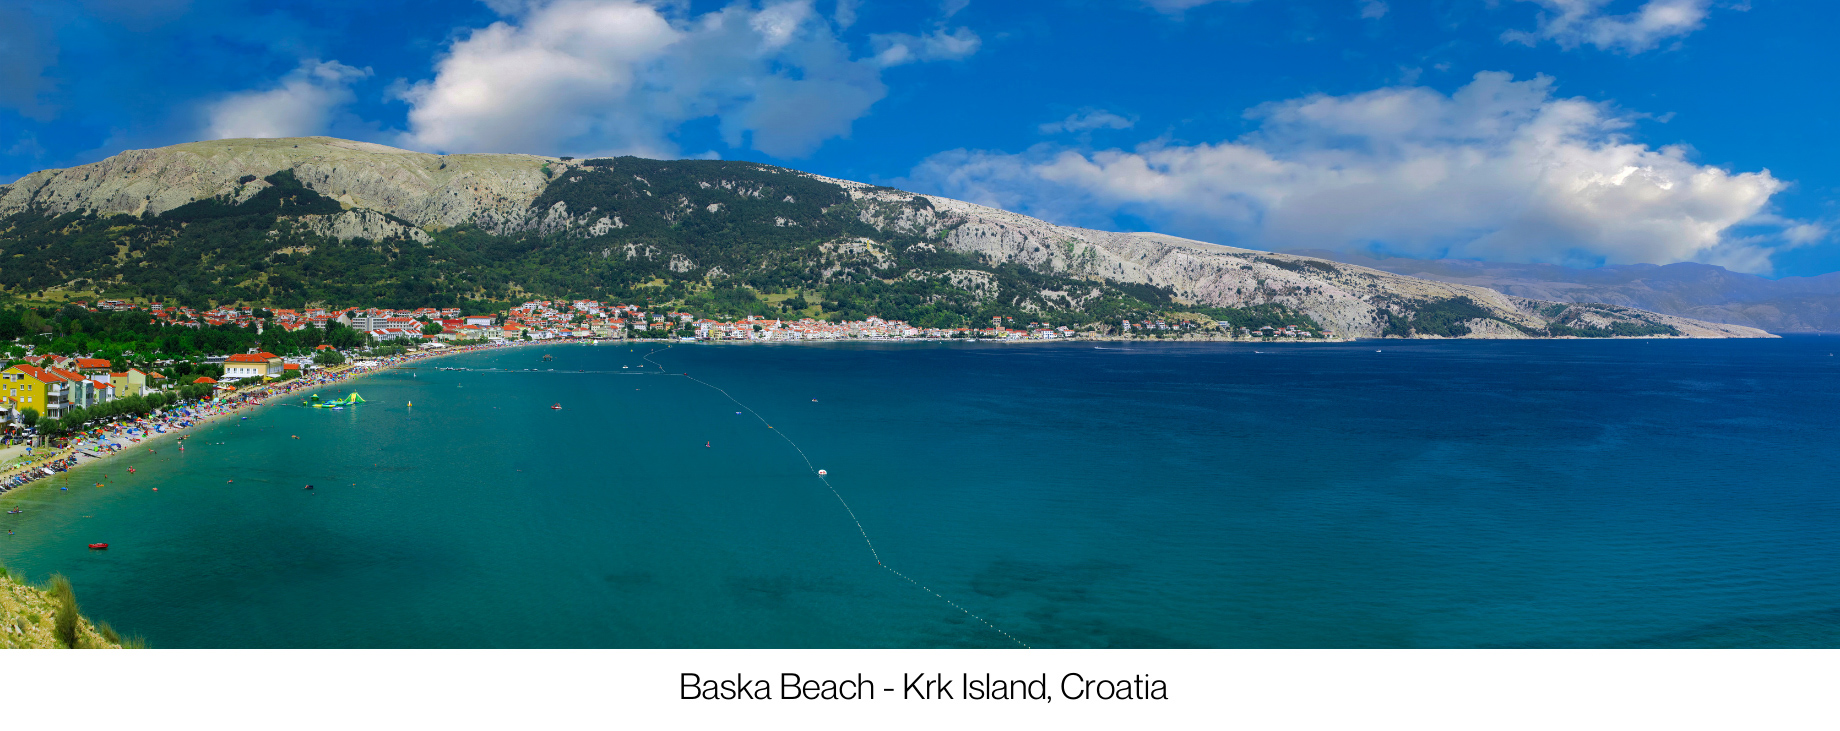 Explore Popular Croatian Destinations Without the Crowds by Yacht -  Baska Beach - Krk Island, Croatia